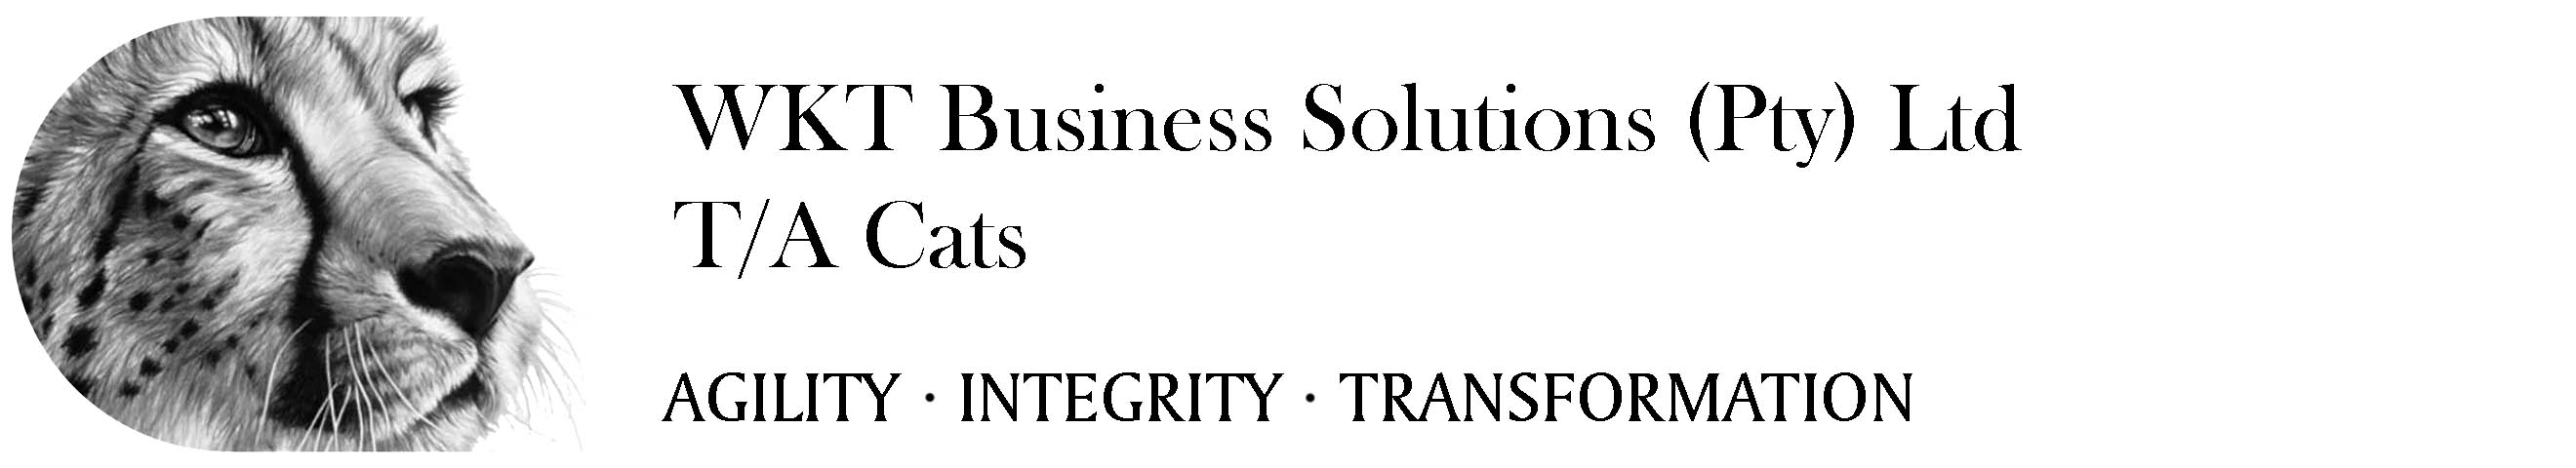 WKT Business Solutions